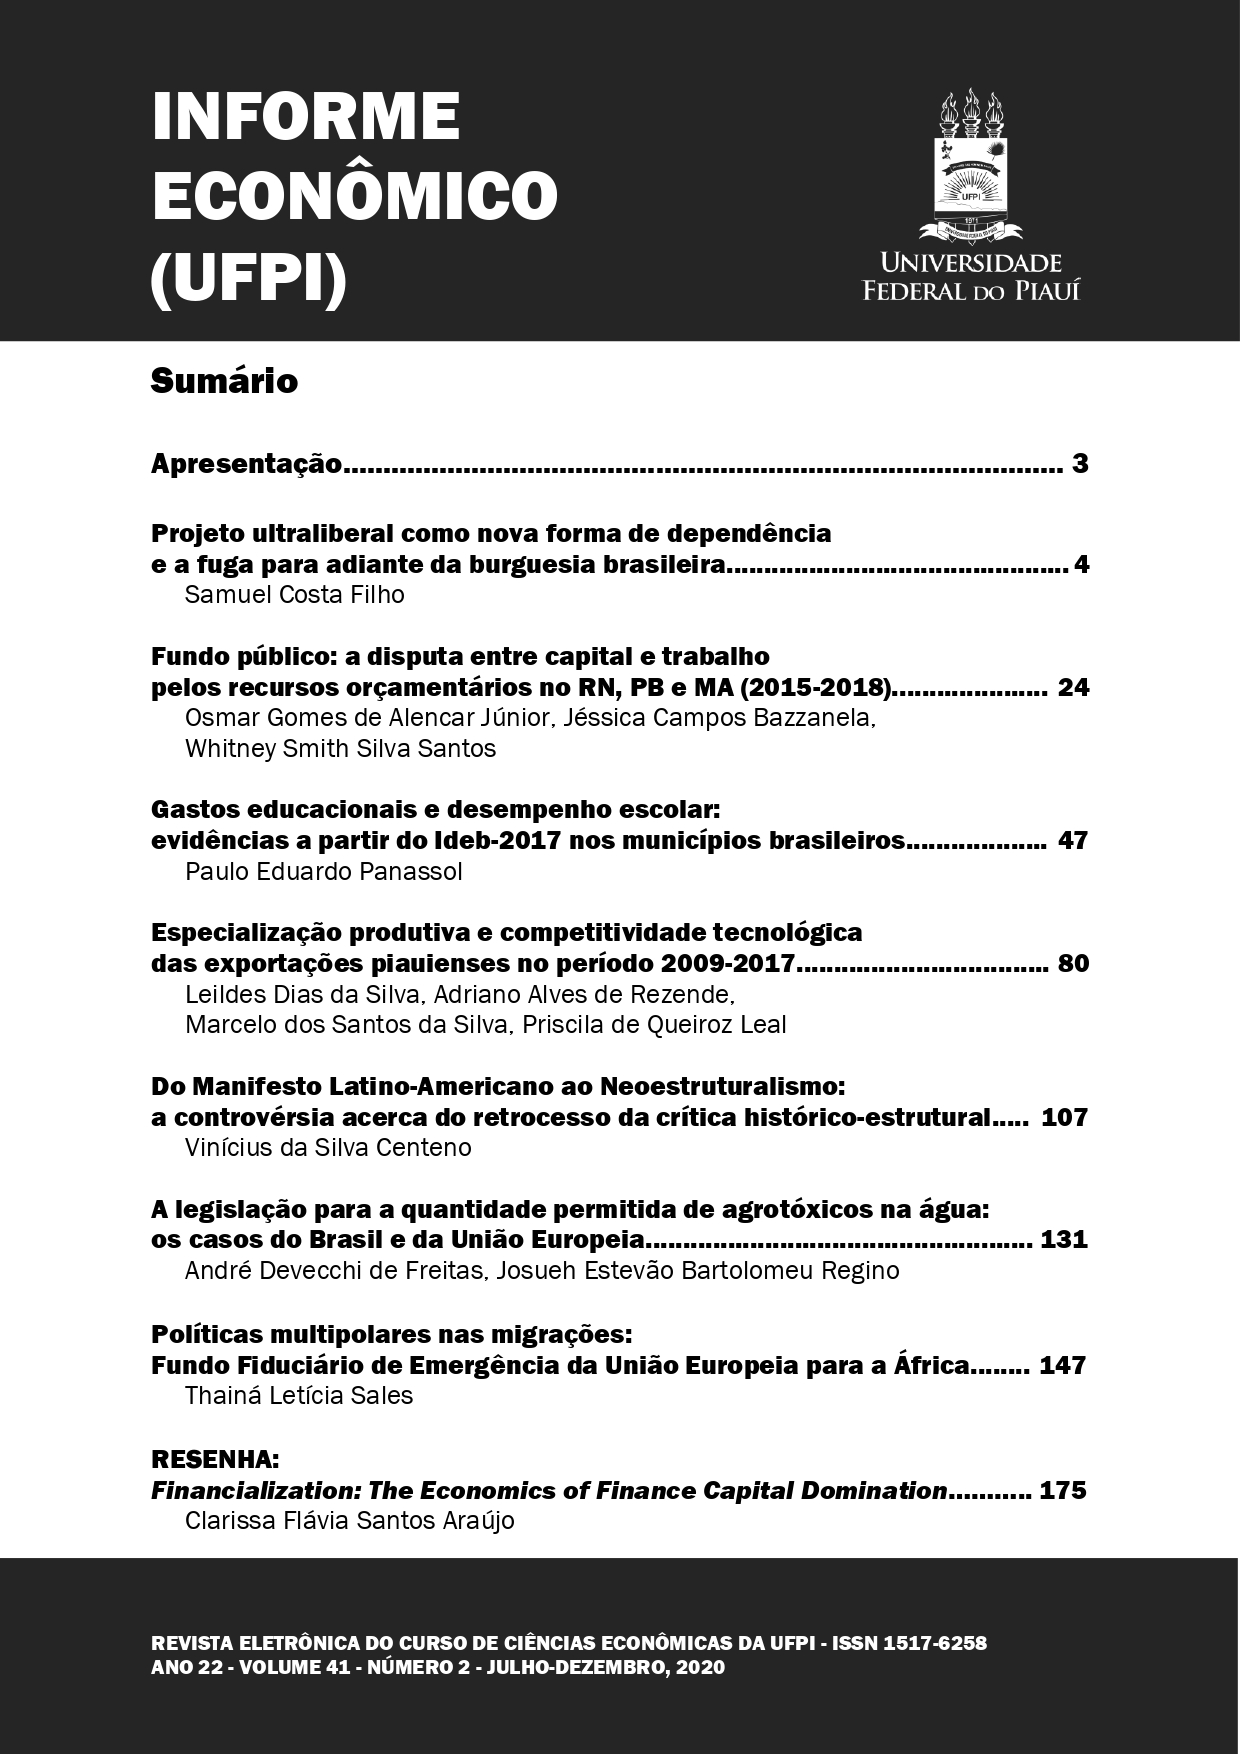 					Visualizar v. 41 n. 2 (2020): INFORME ECONÔMICO (UFPI), Ano 22, Julho-Dezembro
				